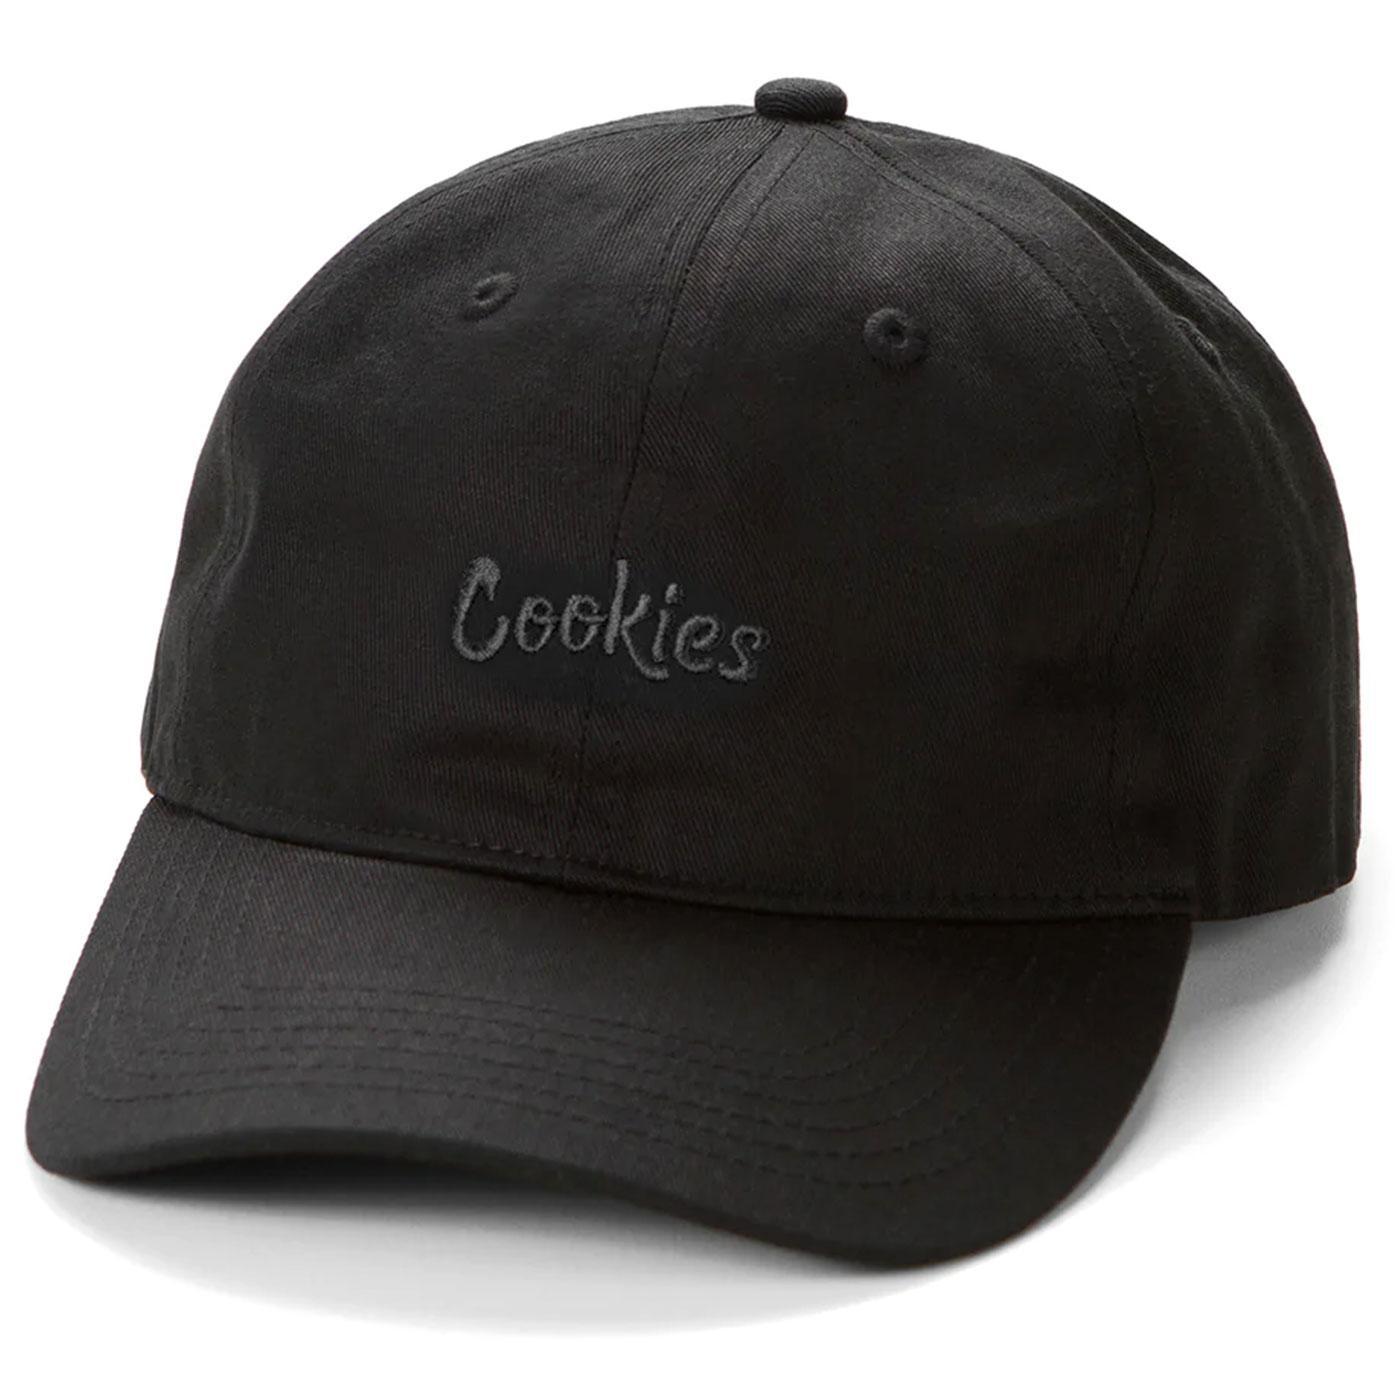 Original Logo Dad Cap (Black/Black) | Cookies Clothing